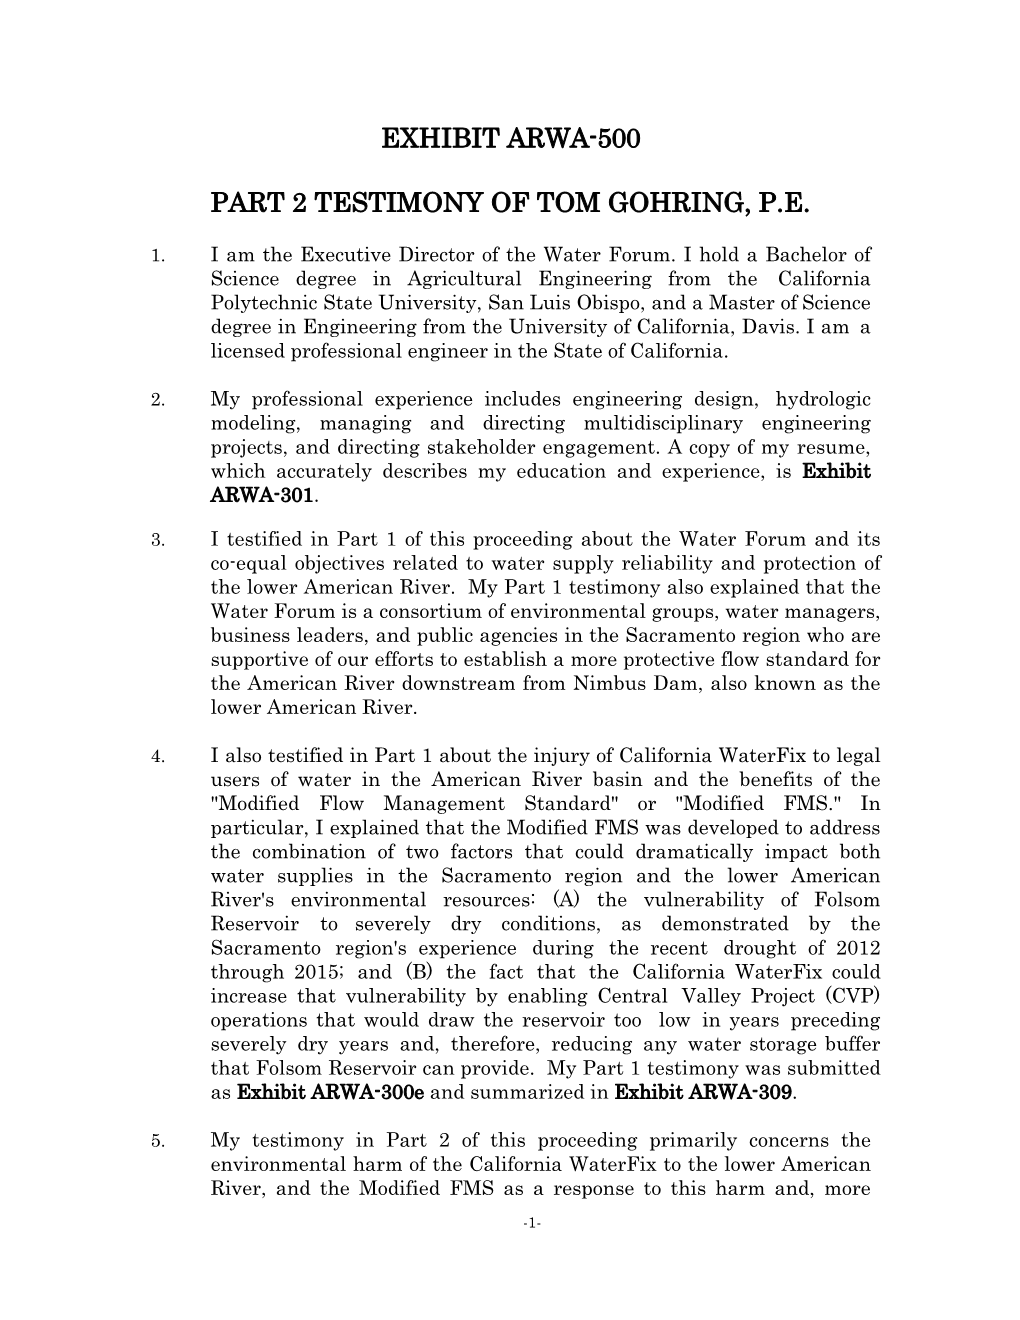 Exhibit Arwa-500 Part 2 Testimony of Tom Gohring, Pe